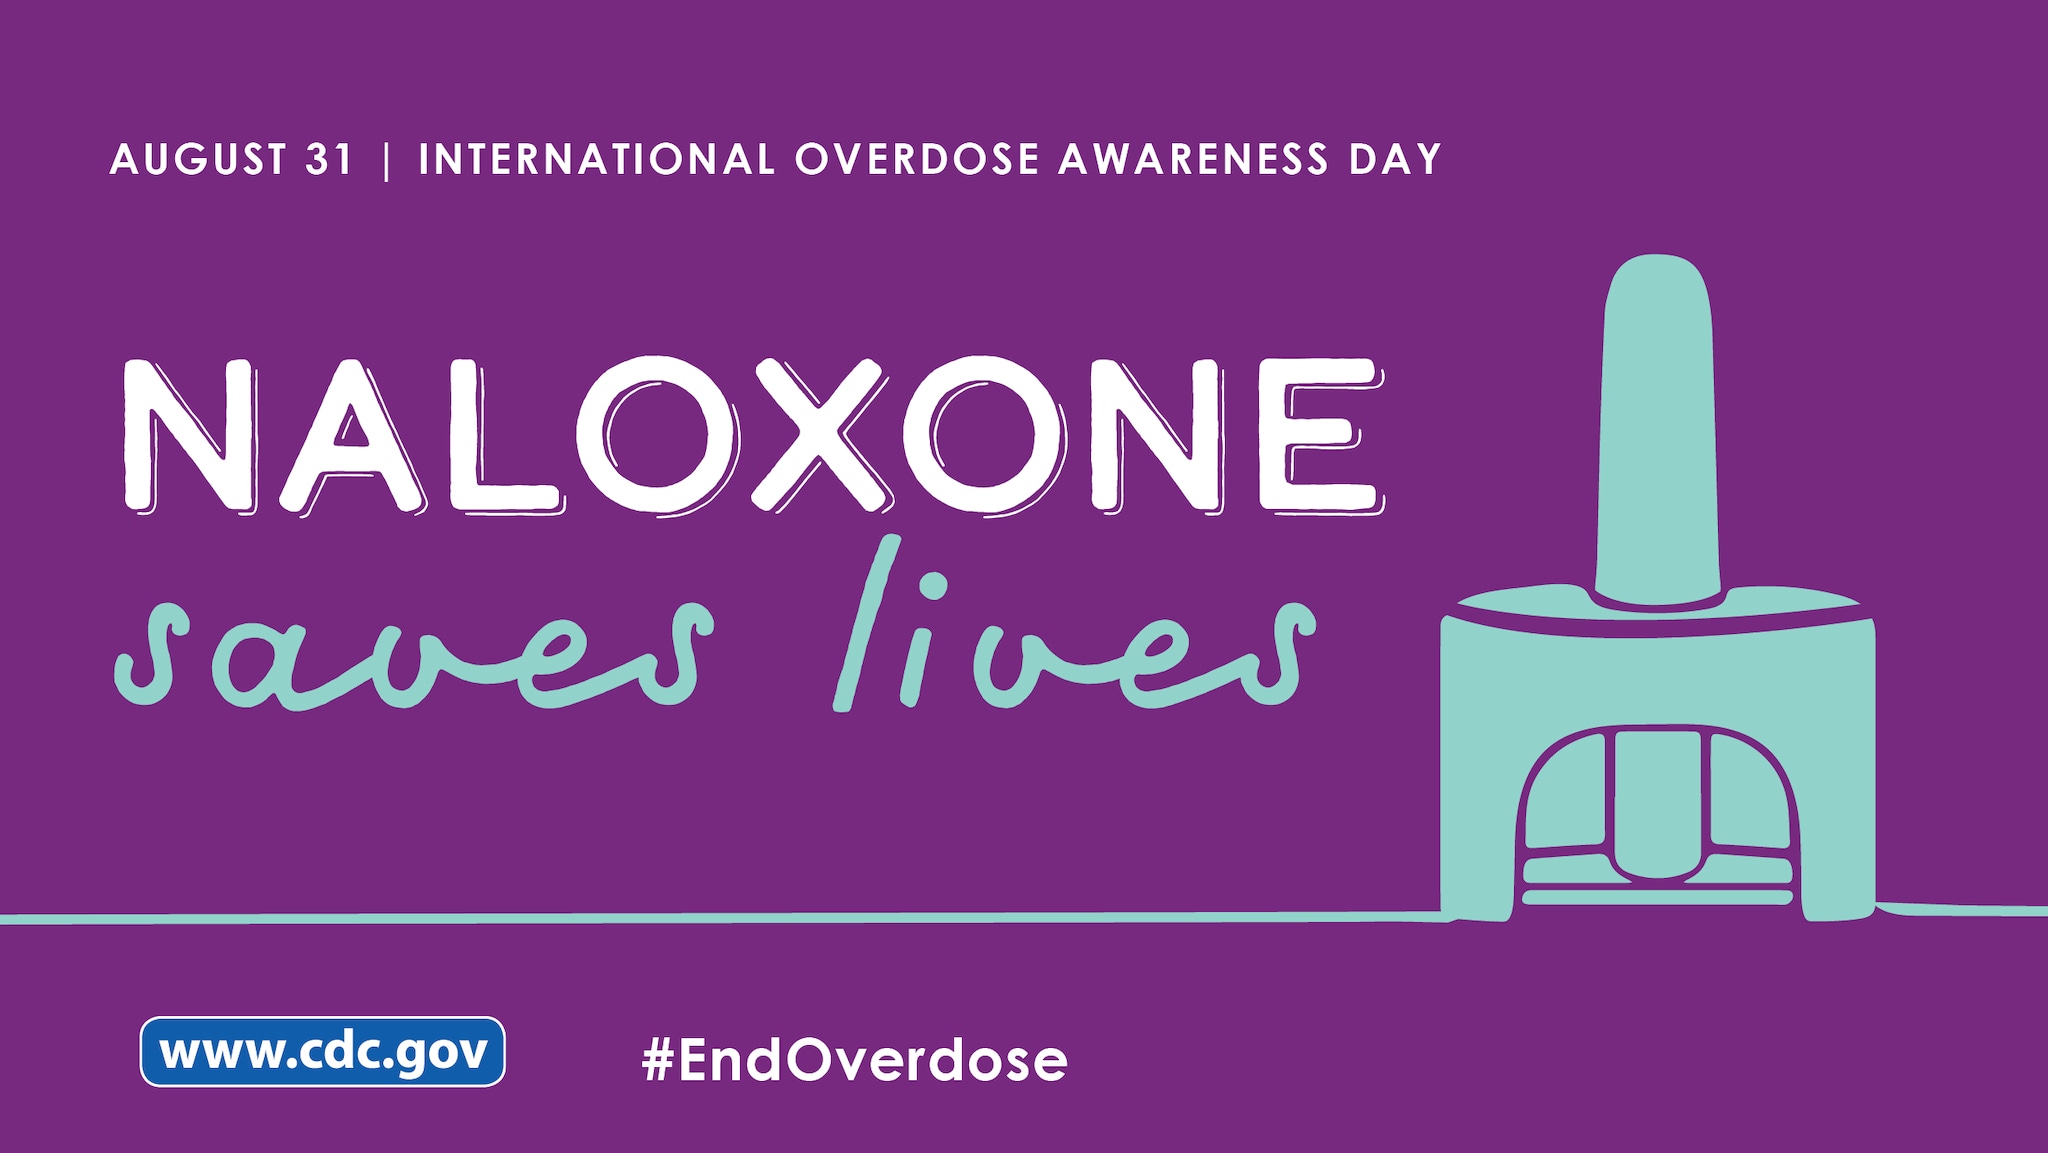 Aug 31 International Overdose Awareness Day.   Naloxone saves lives.